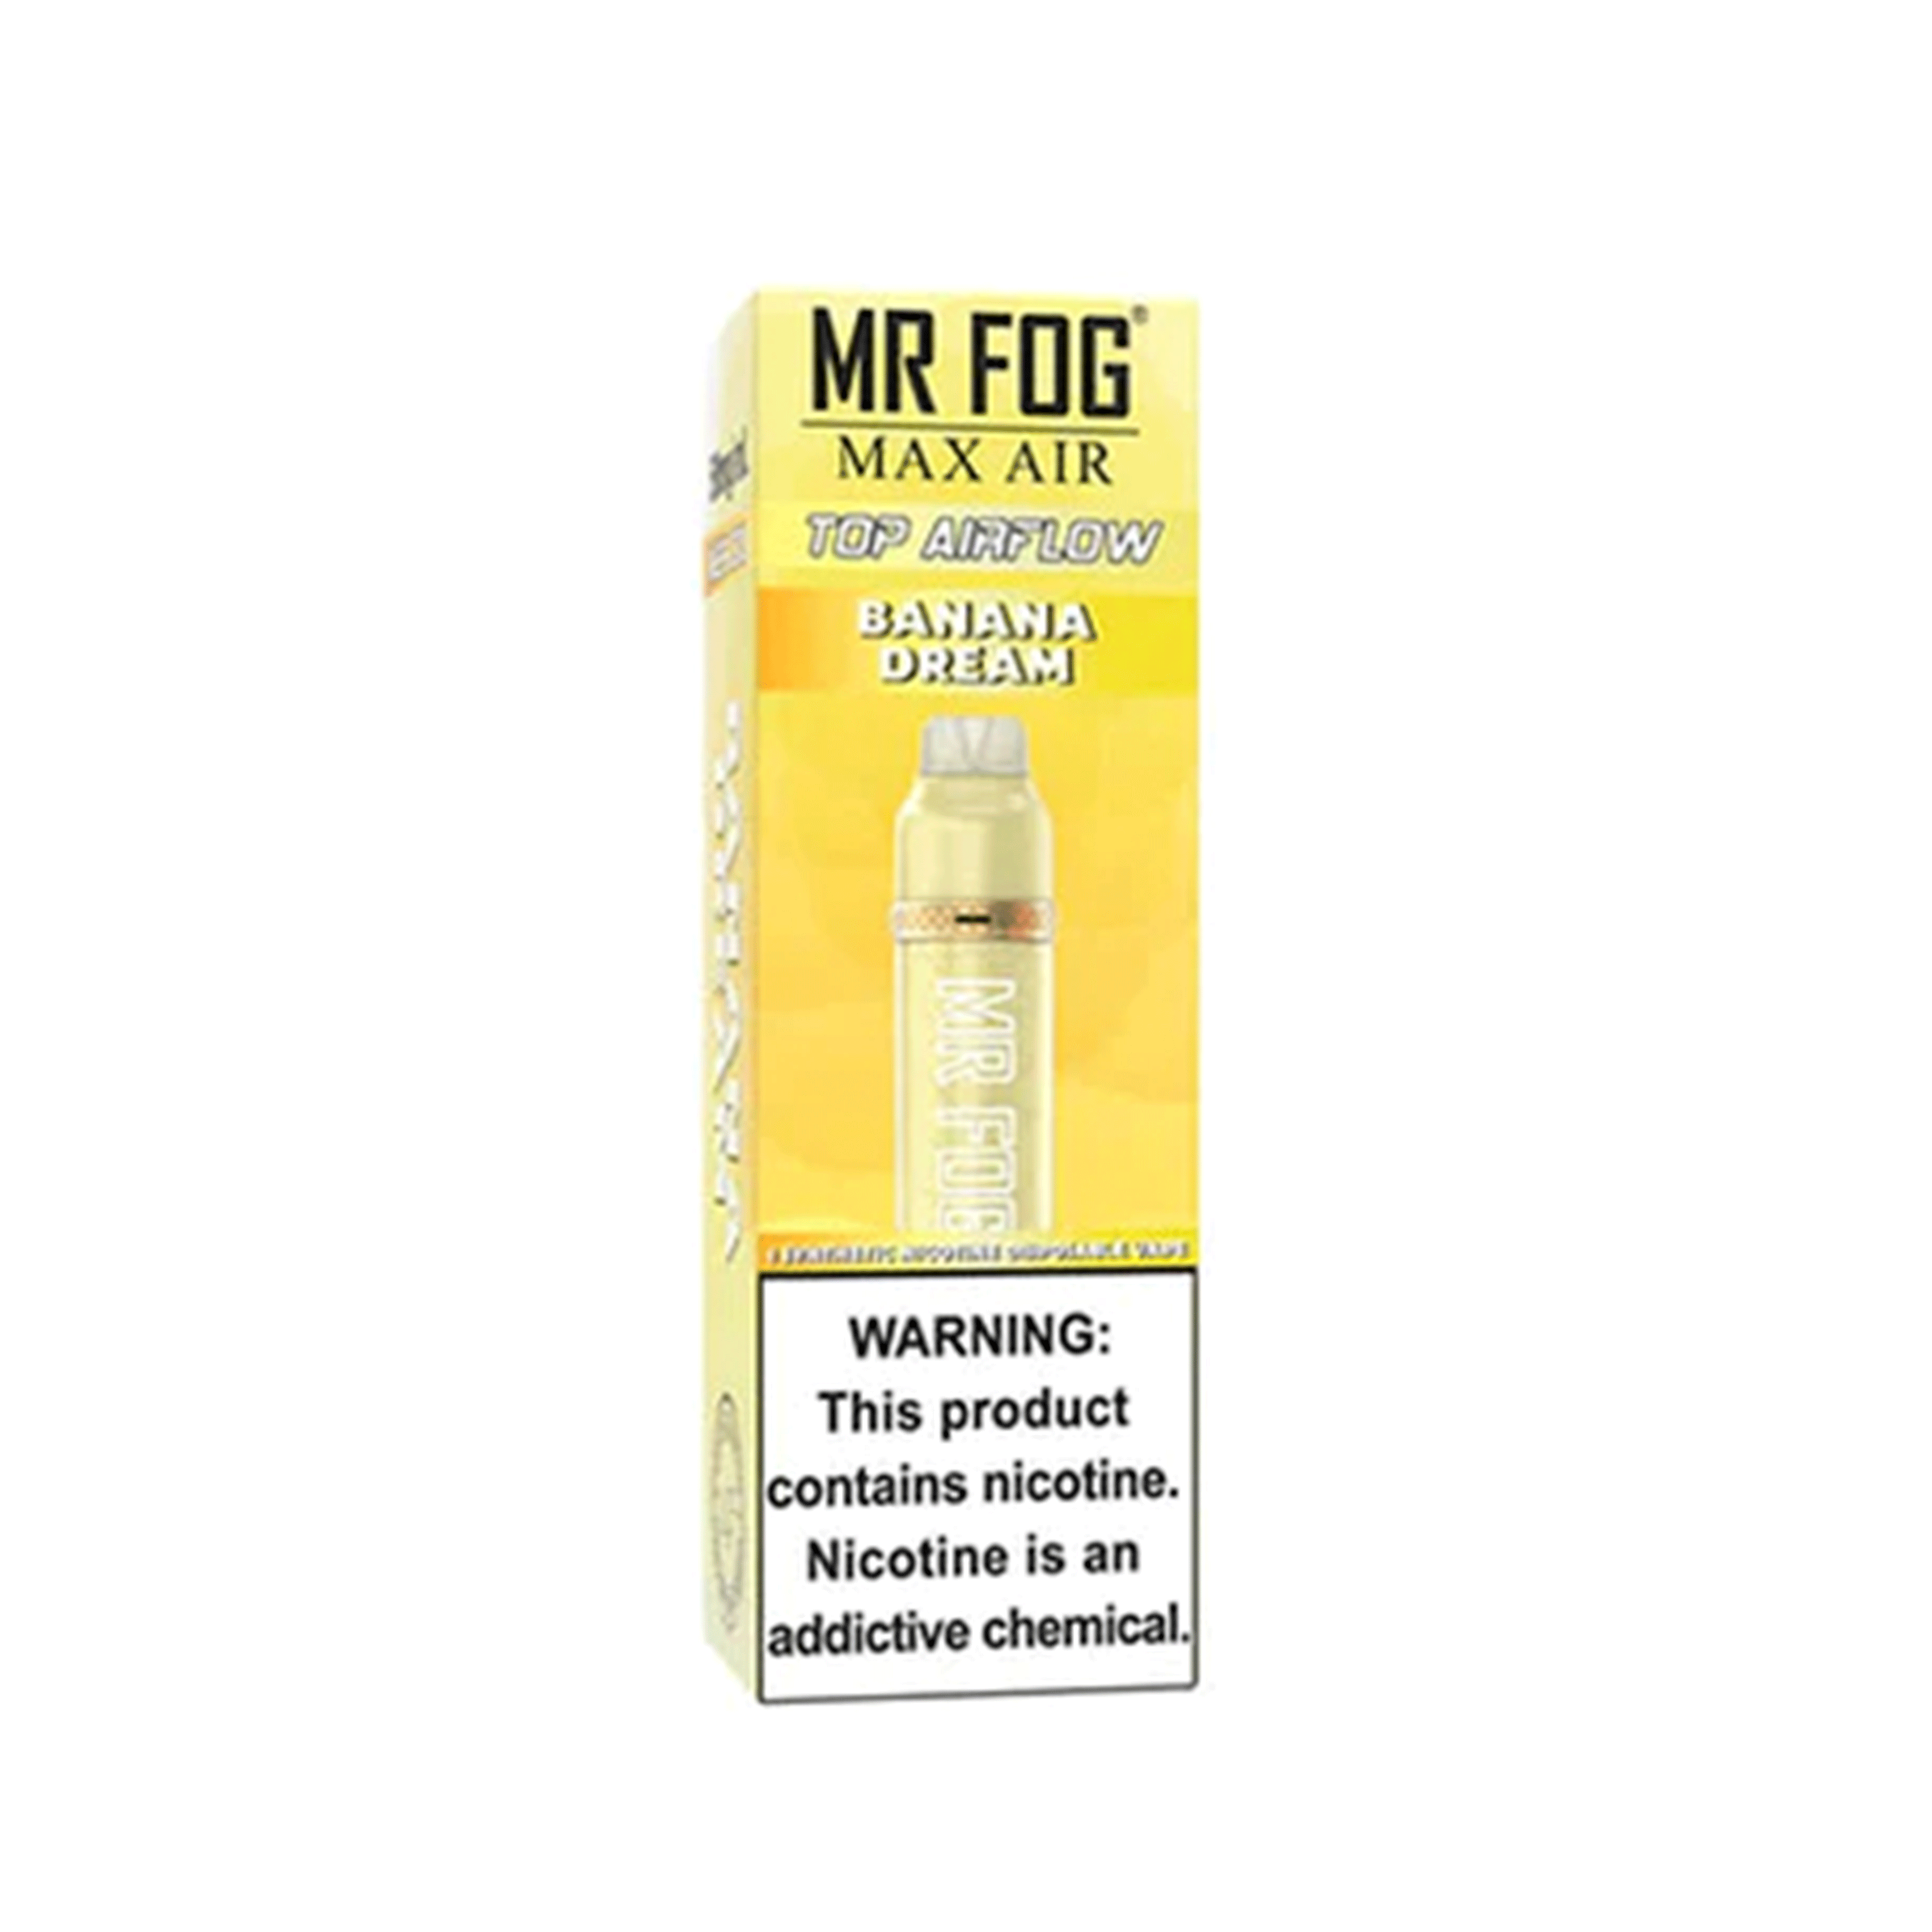 Mr. Fog Max Air Disposable Vape - Banana Dream available on Canada online vape shop